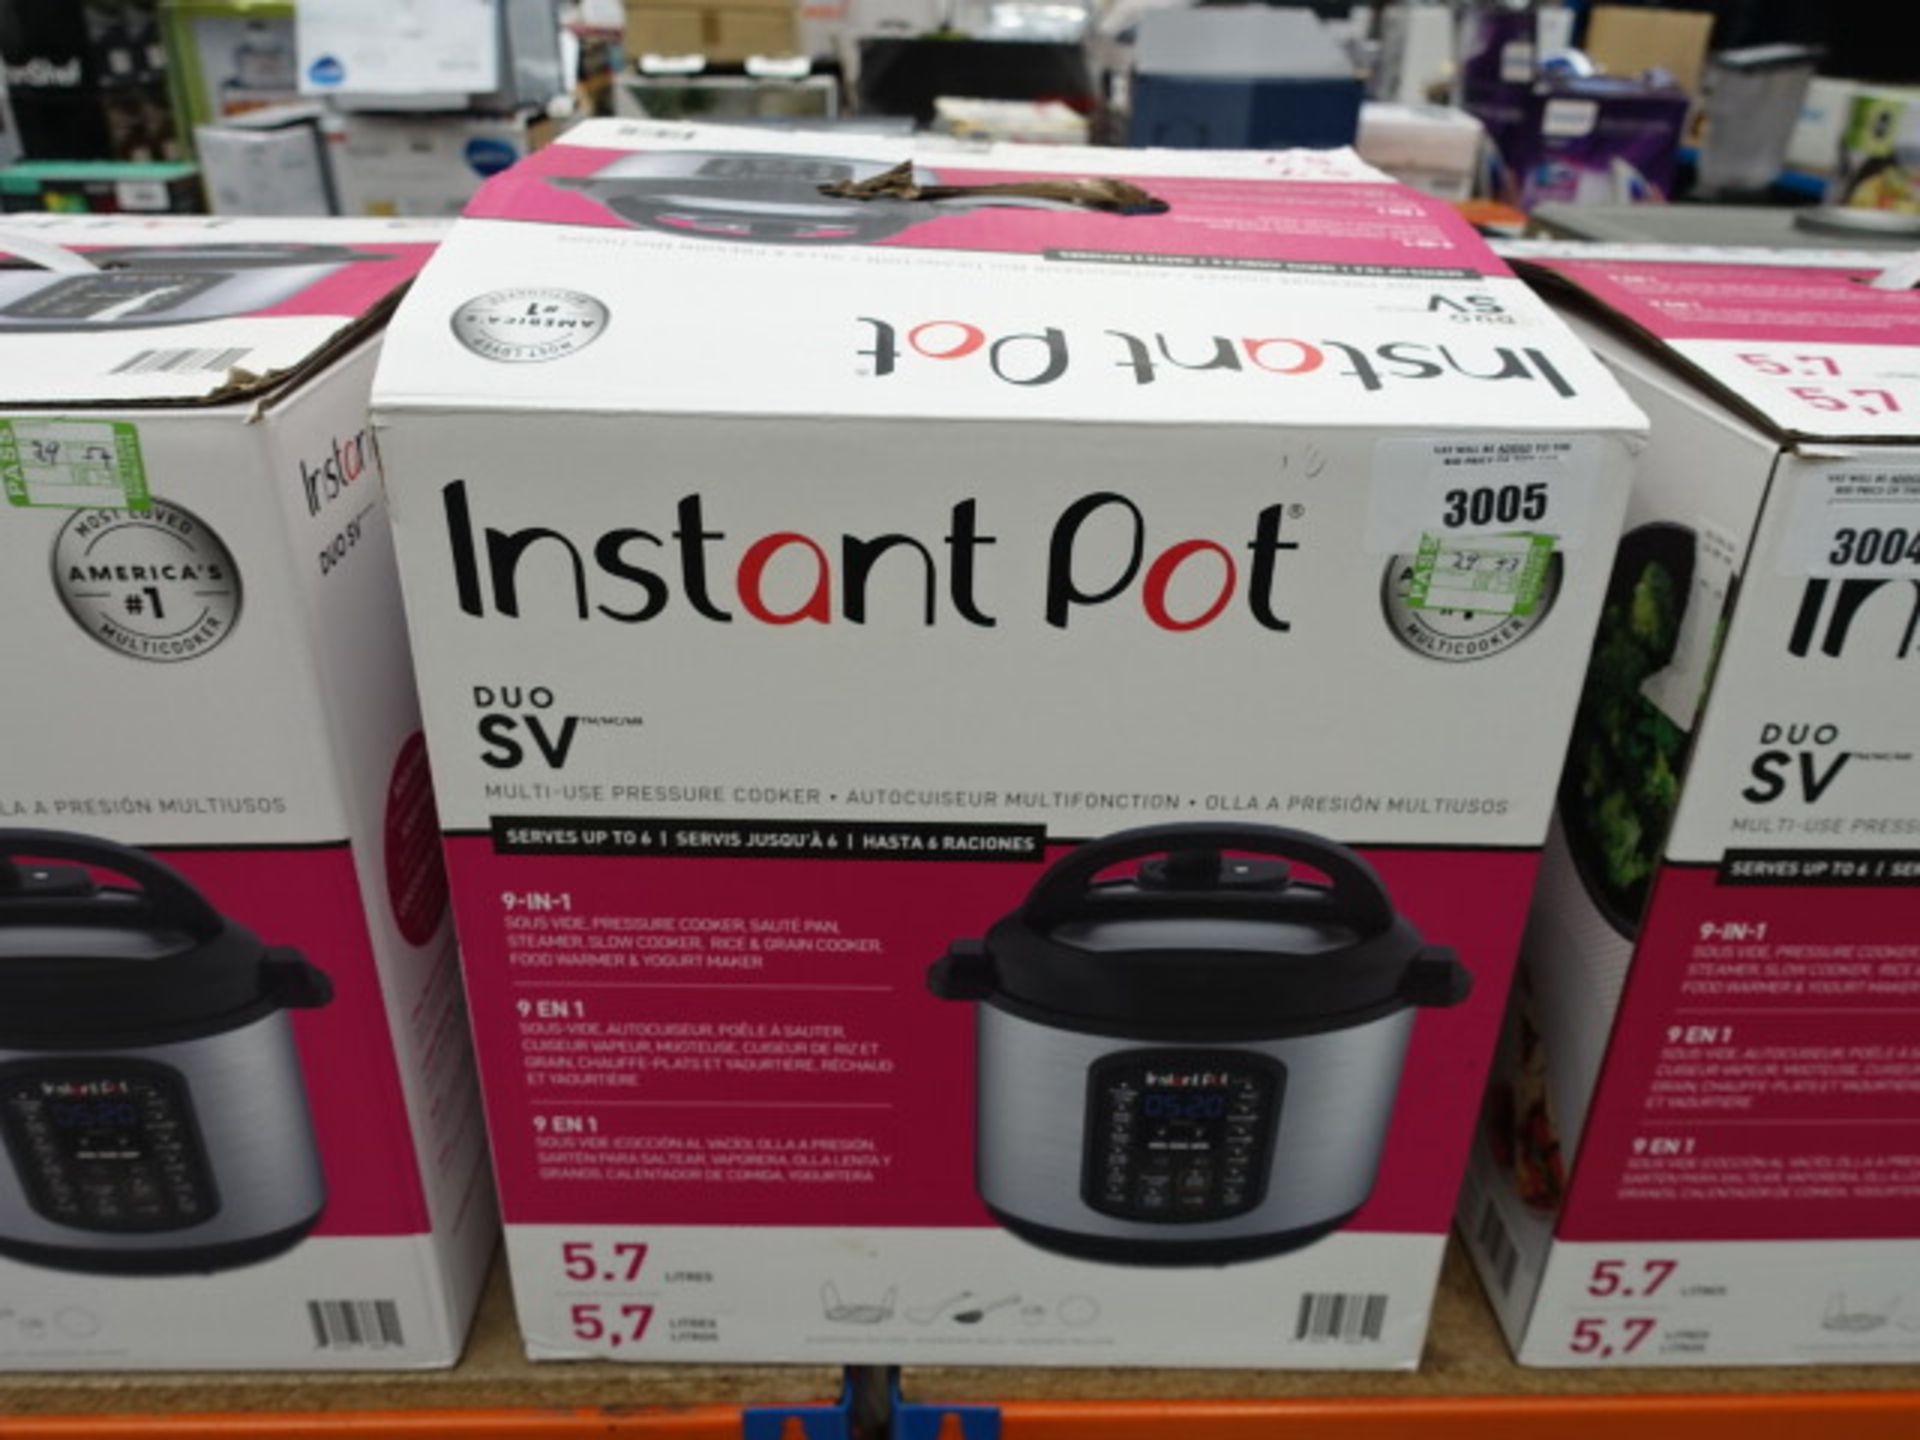 3087 - Instant Pot multi use pressure cooker